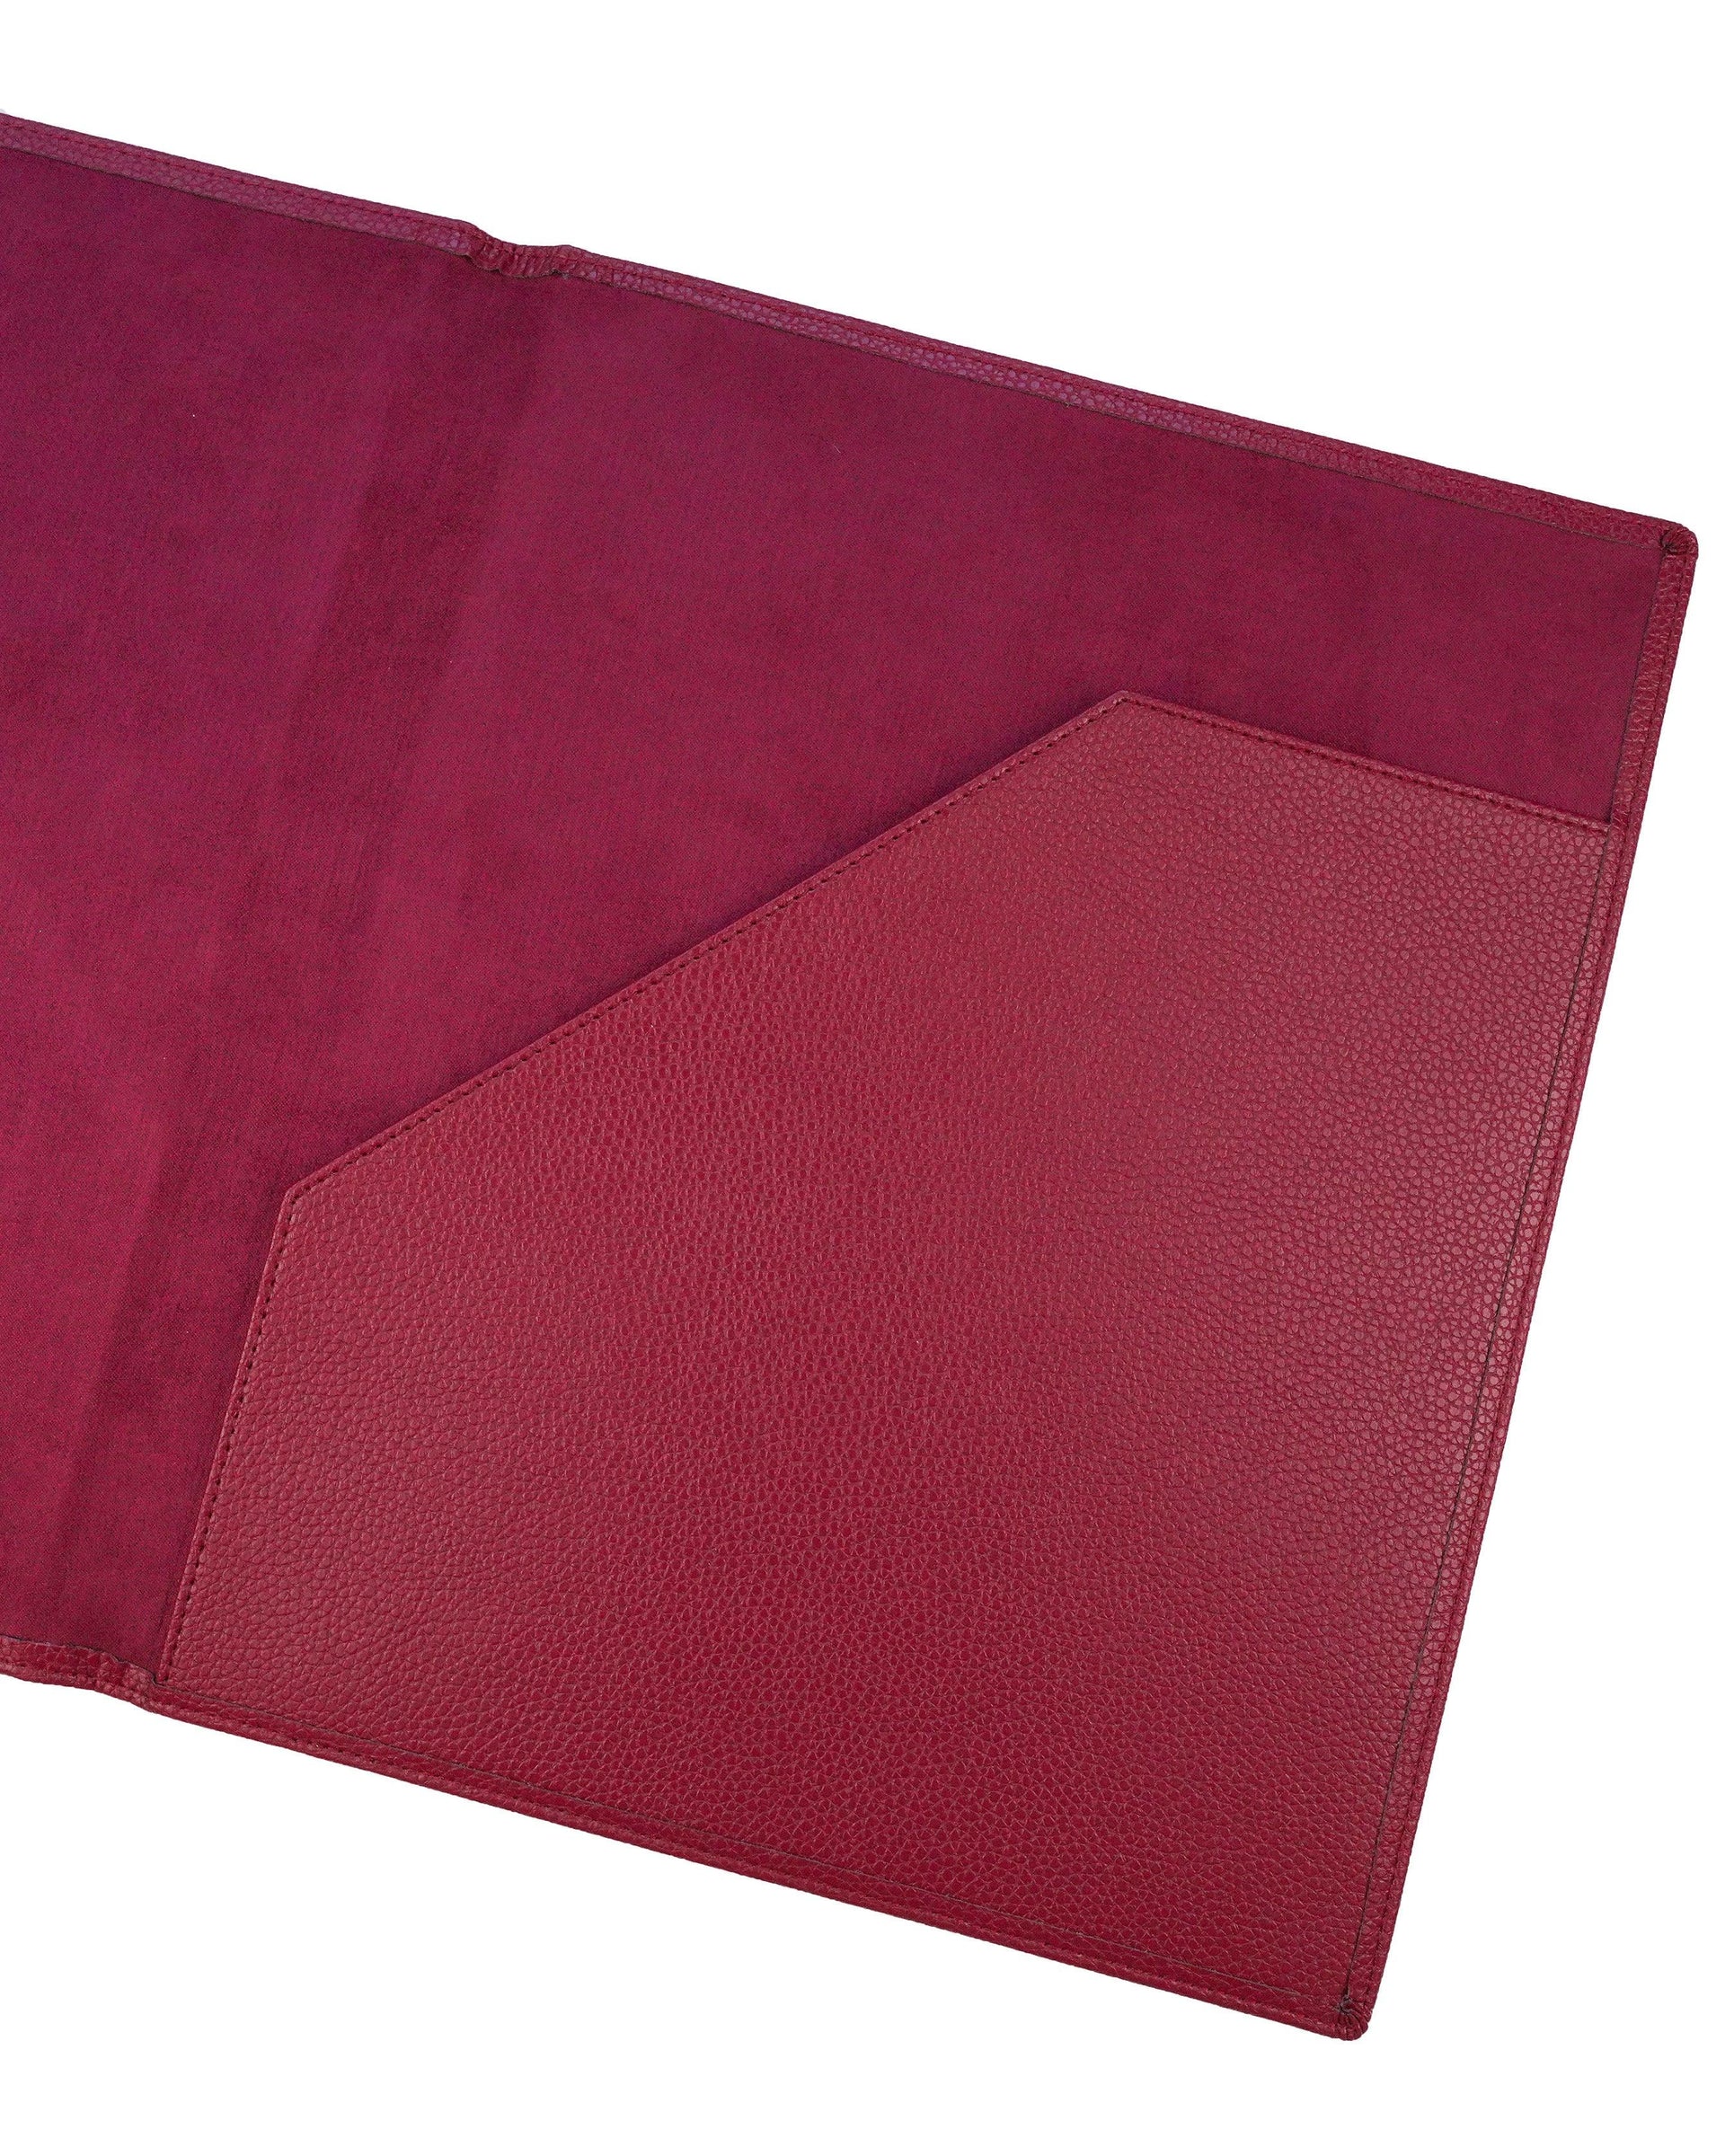 Leather Folio Folder | Wine Vegan Leather - Jane's Agenda®